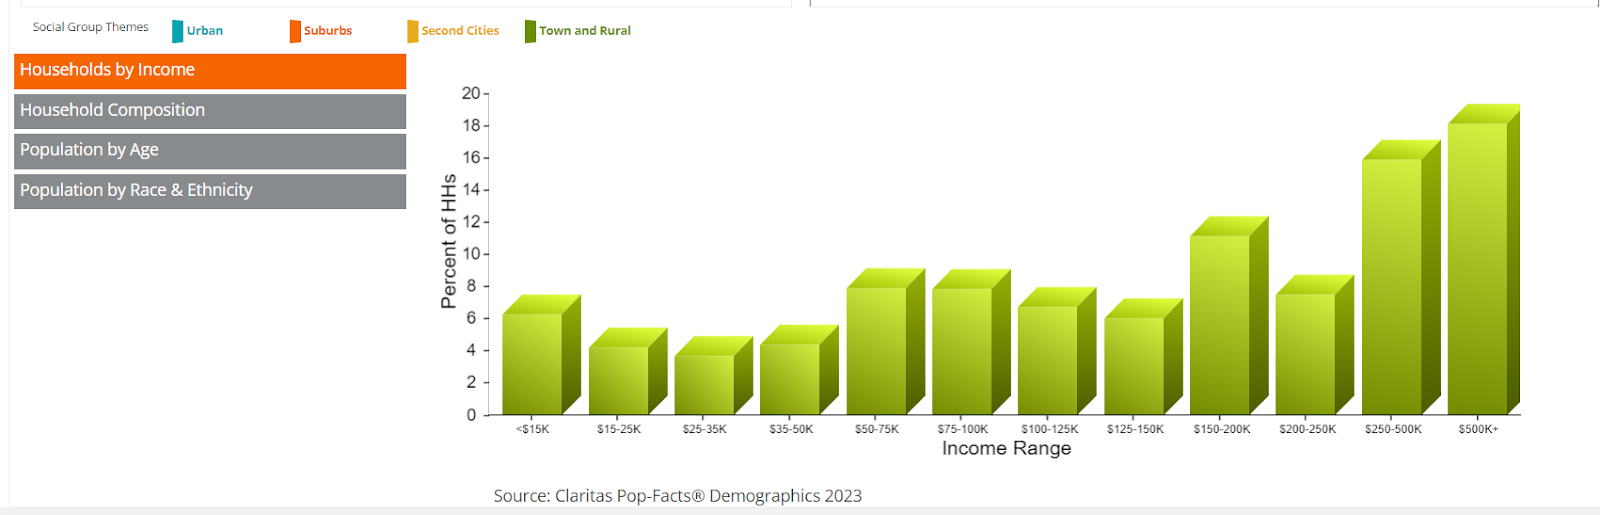 Claritas salary range graph example for zip code 90210.